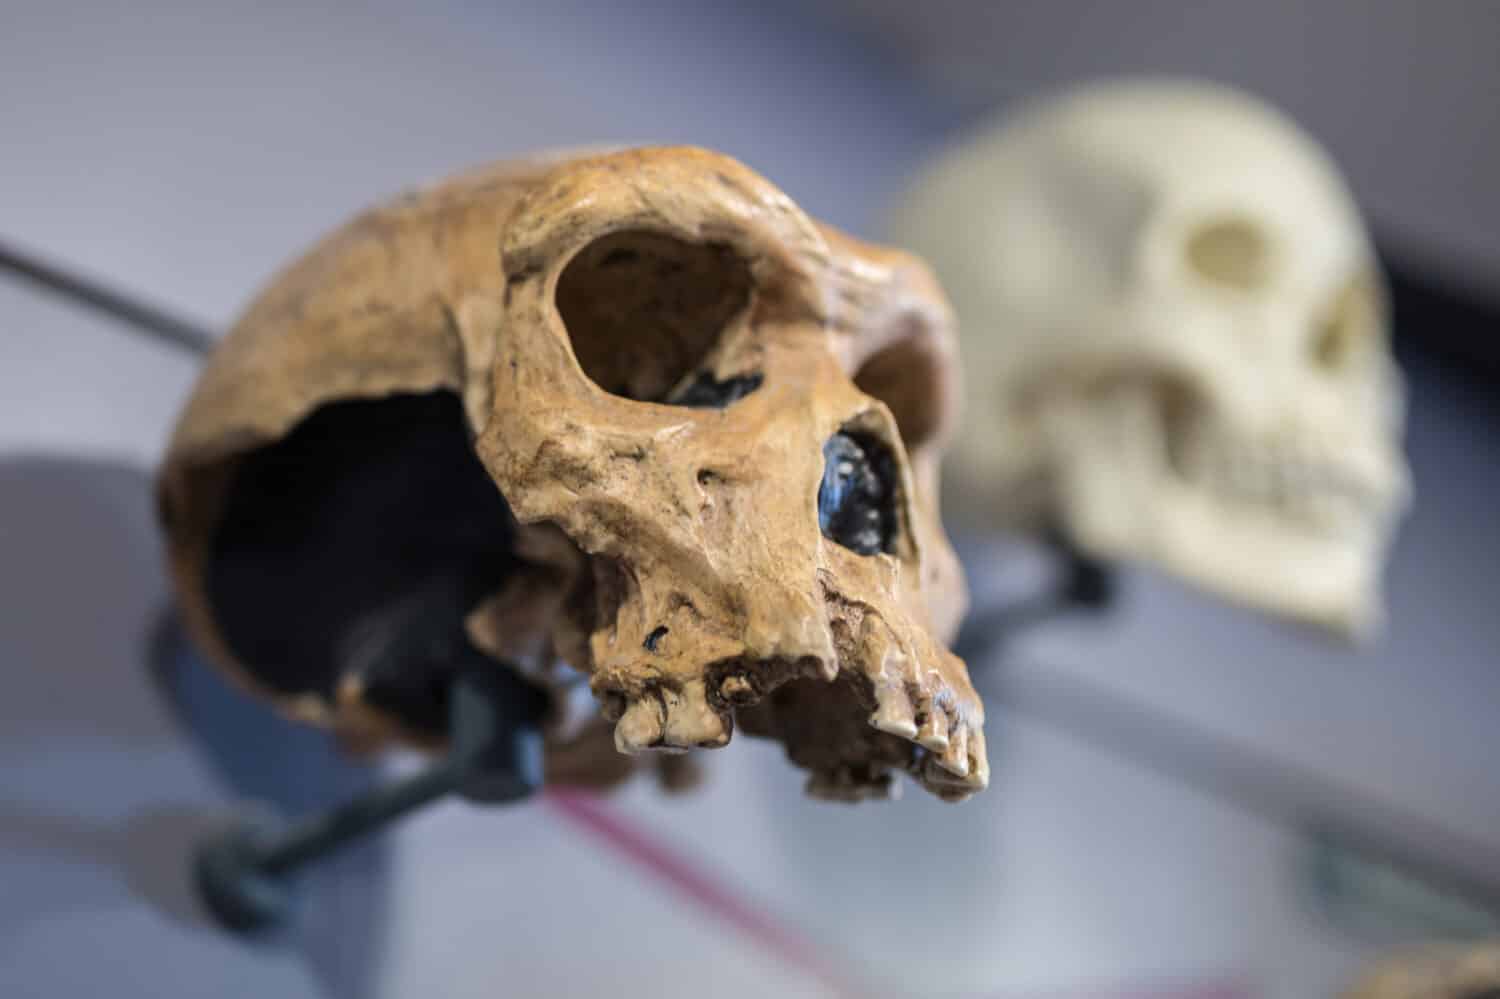 Human Fossil Skeleton of "Lucy" the 3.2 Million Year Old Australopithecus Afarensis